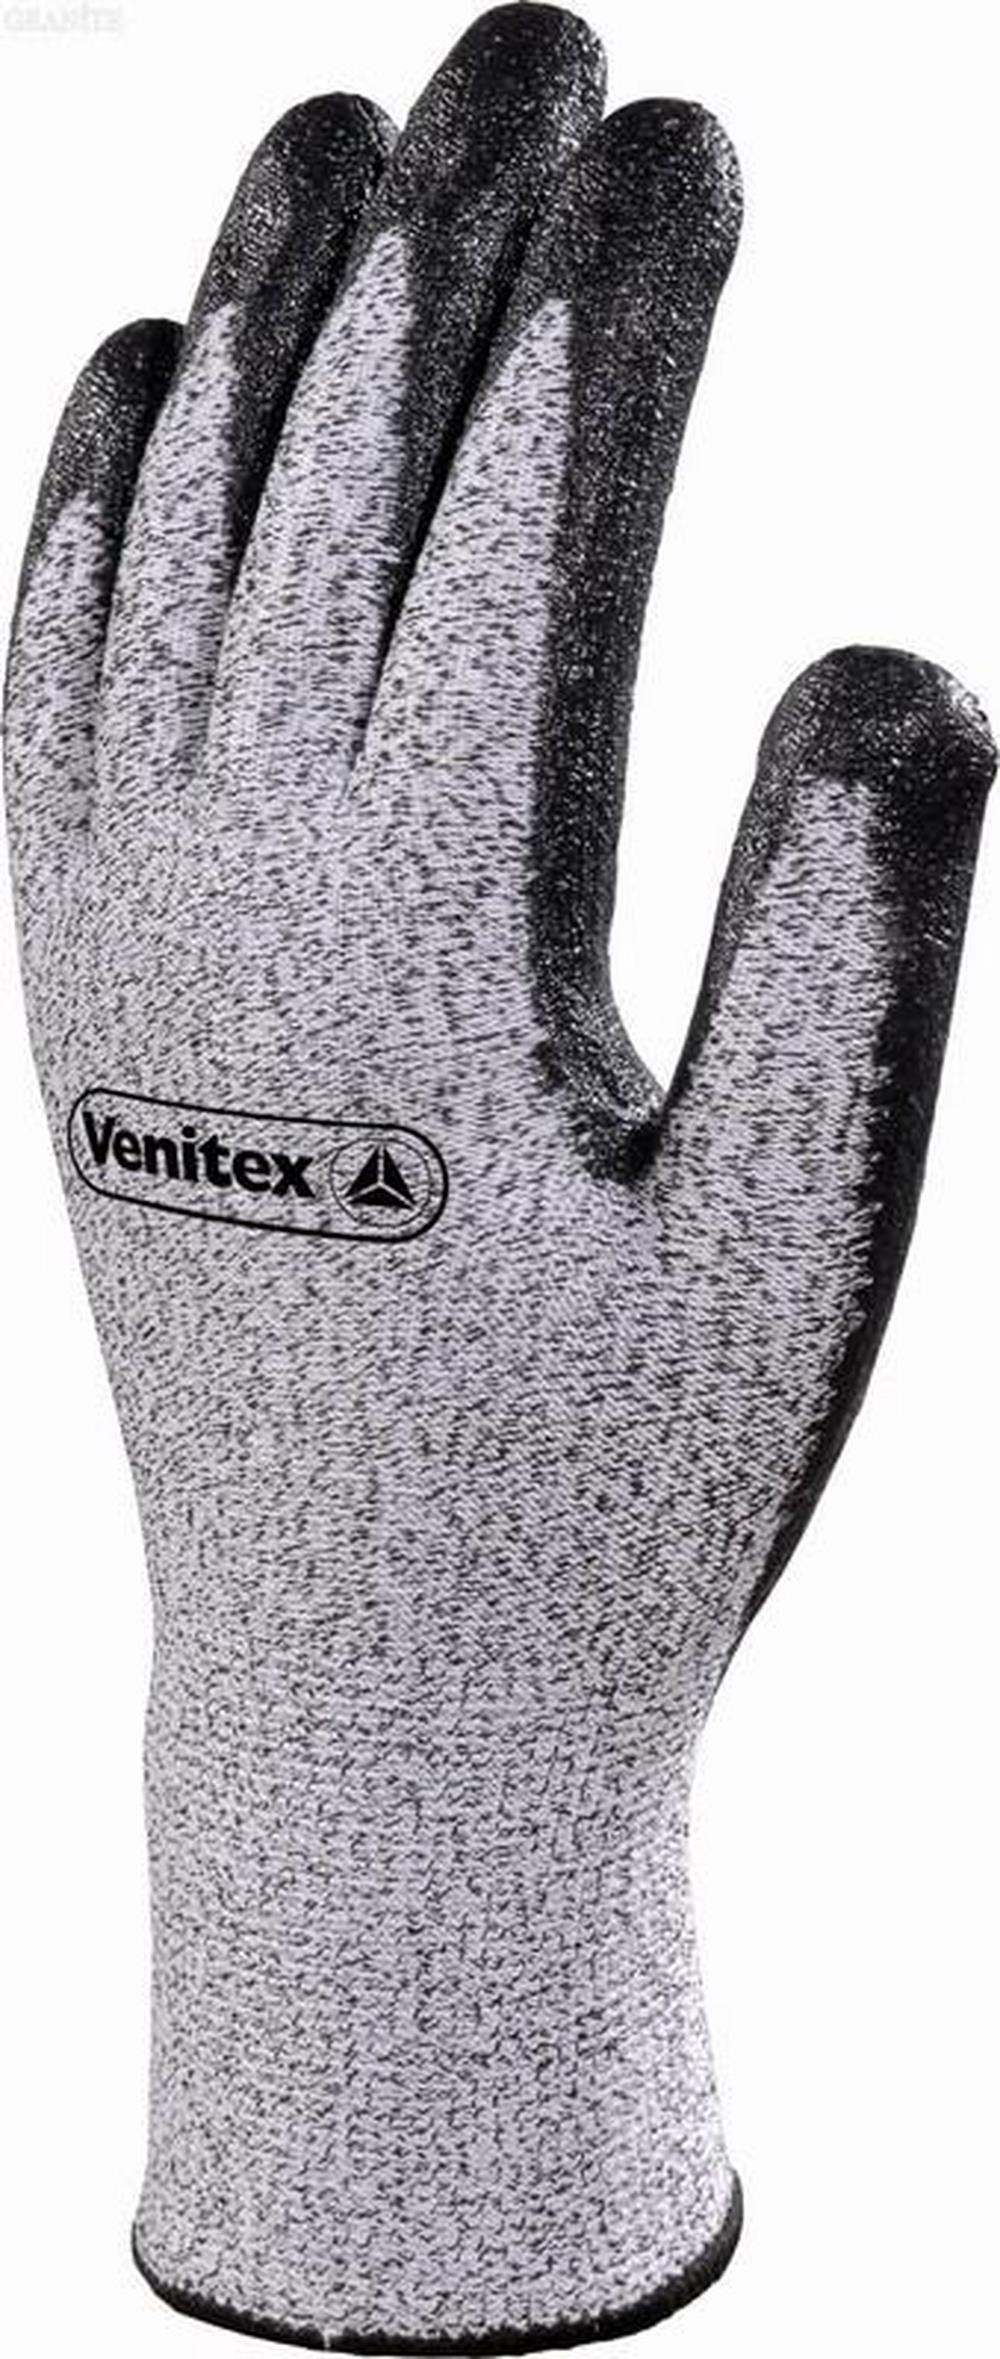 Taeki Knitted Cut Resistant Gloves VENICUT41 Nitrile Palm